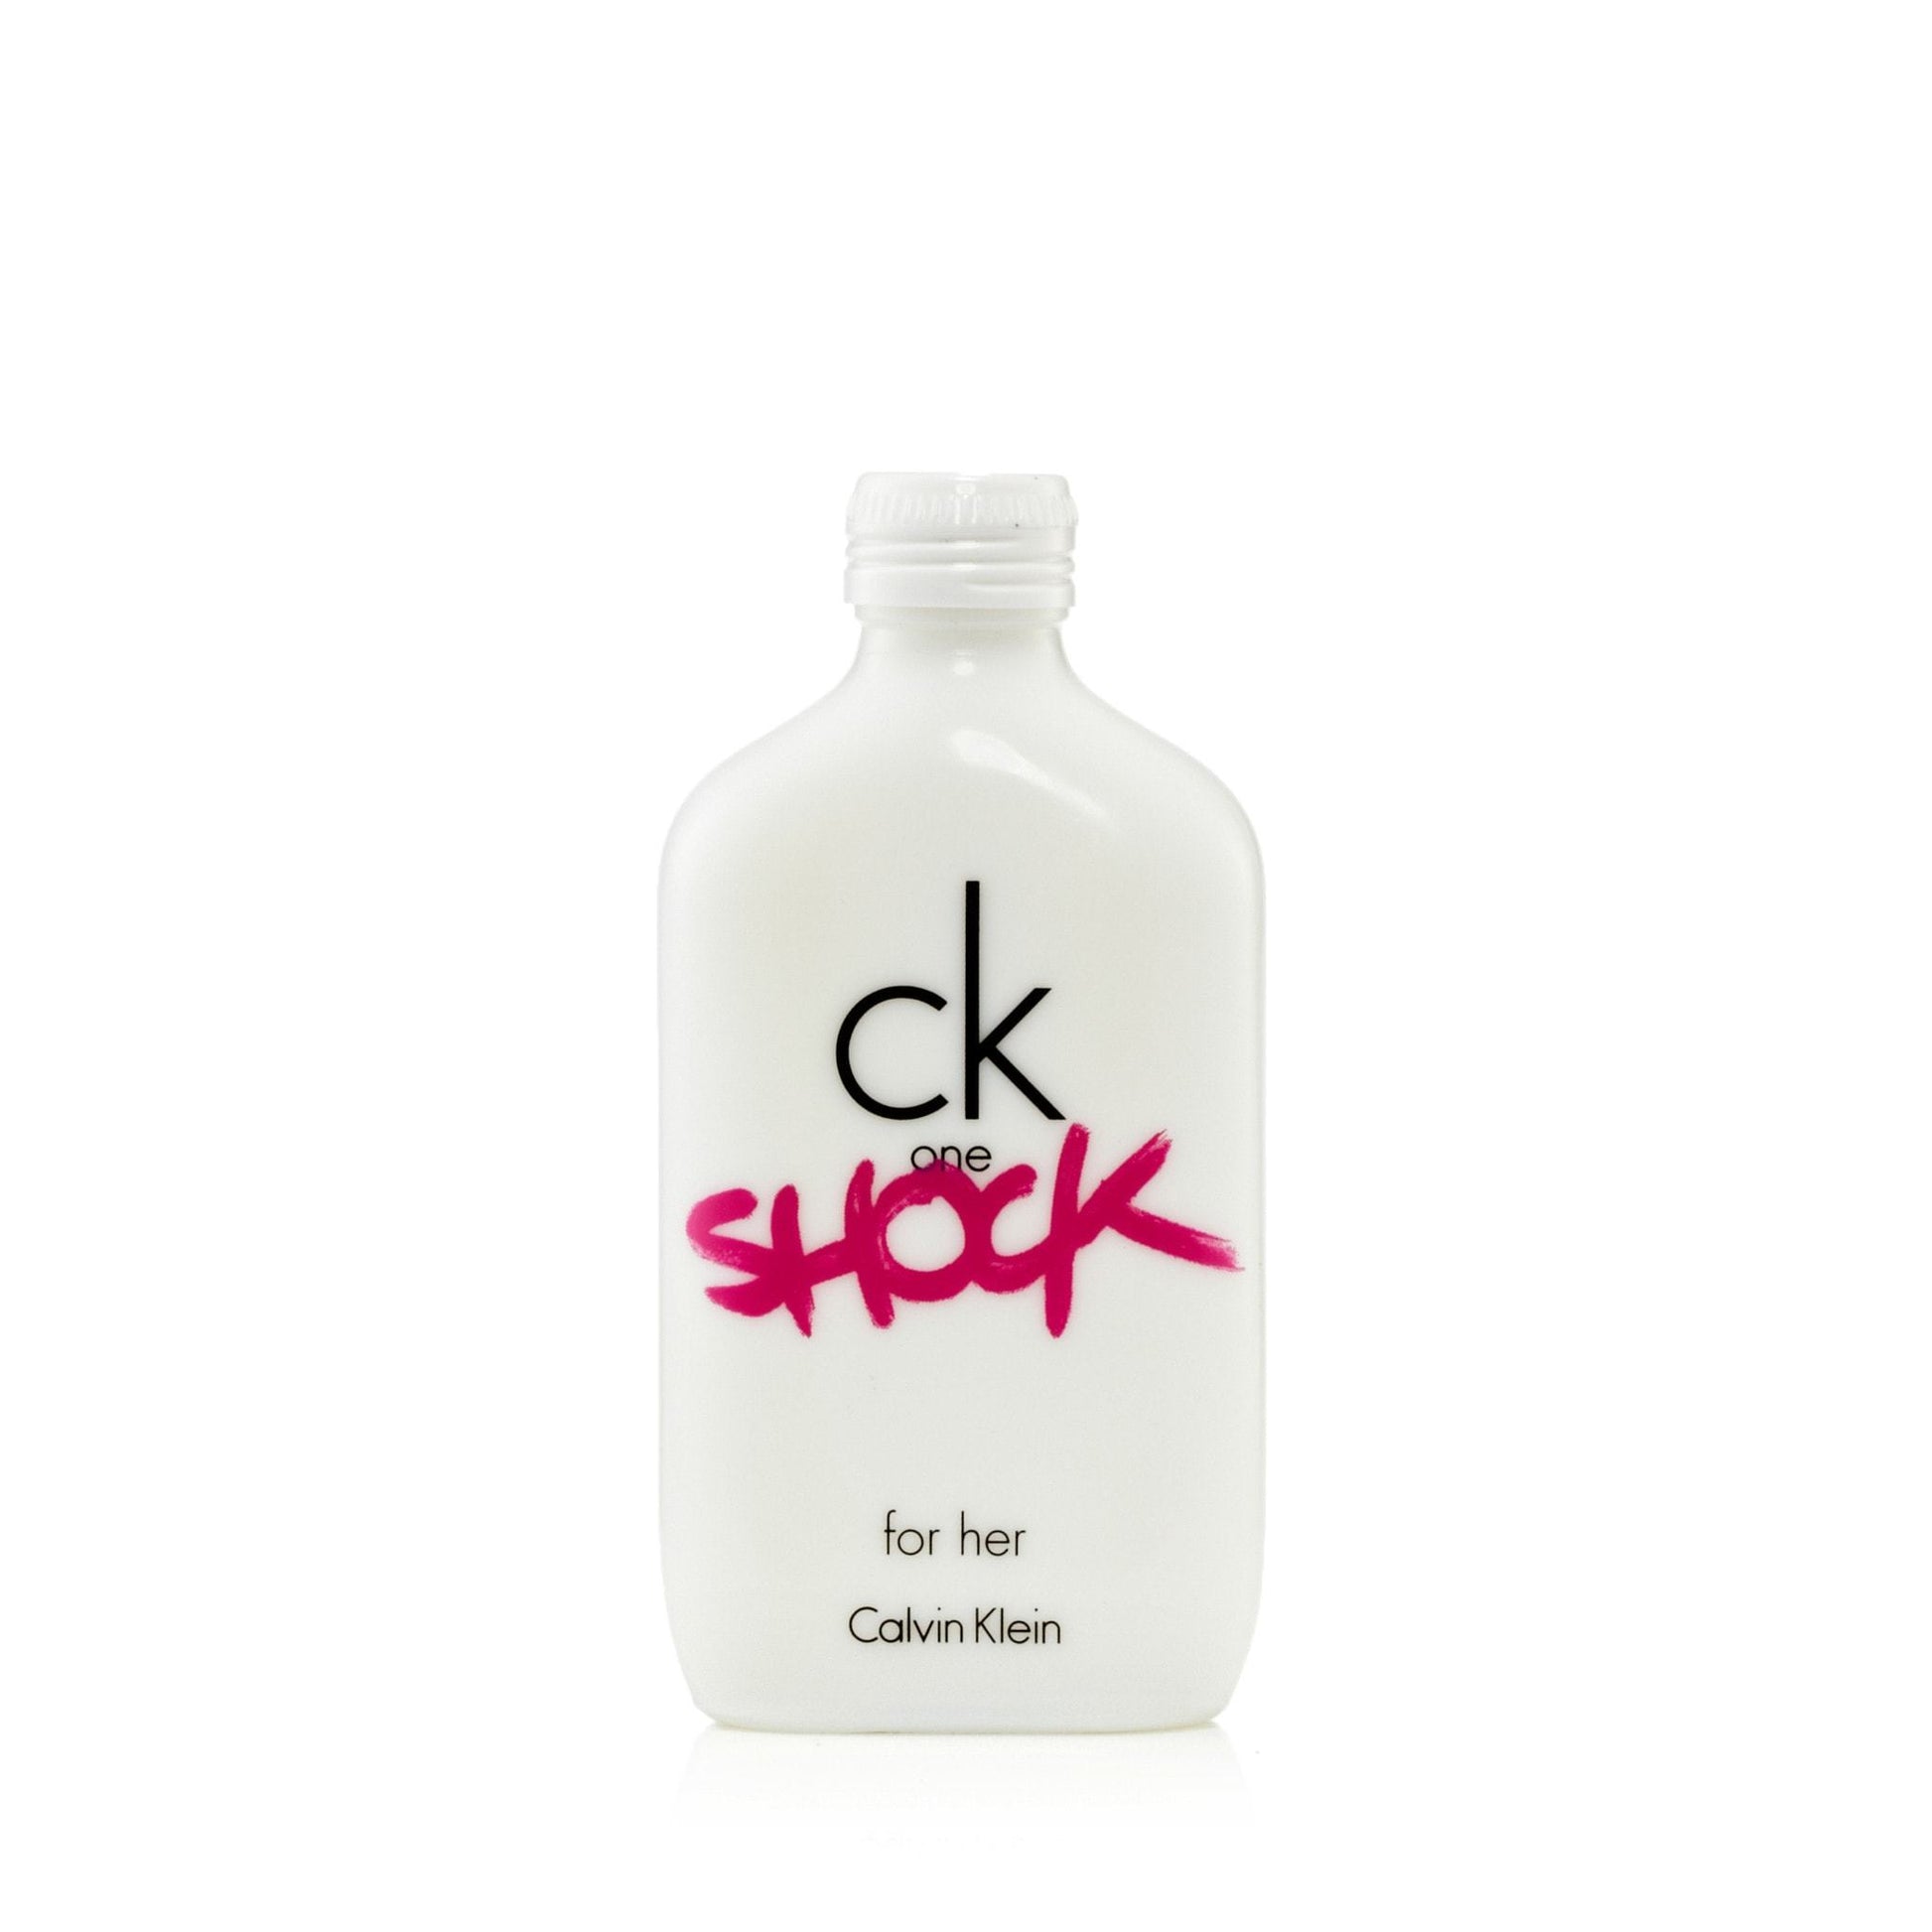 CK One Shock Eau de Toilette Spray for Women by Calvin Klein, Product image 1